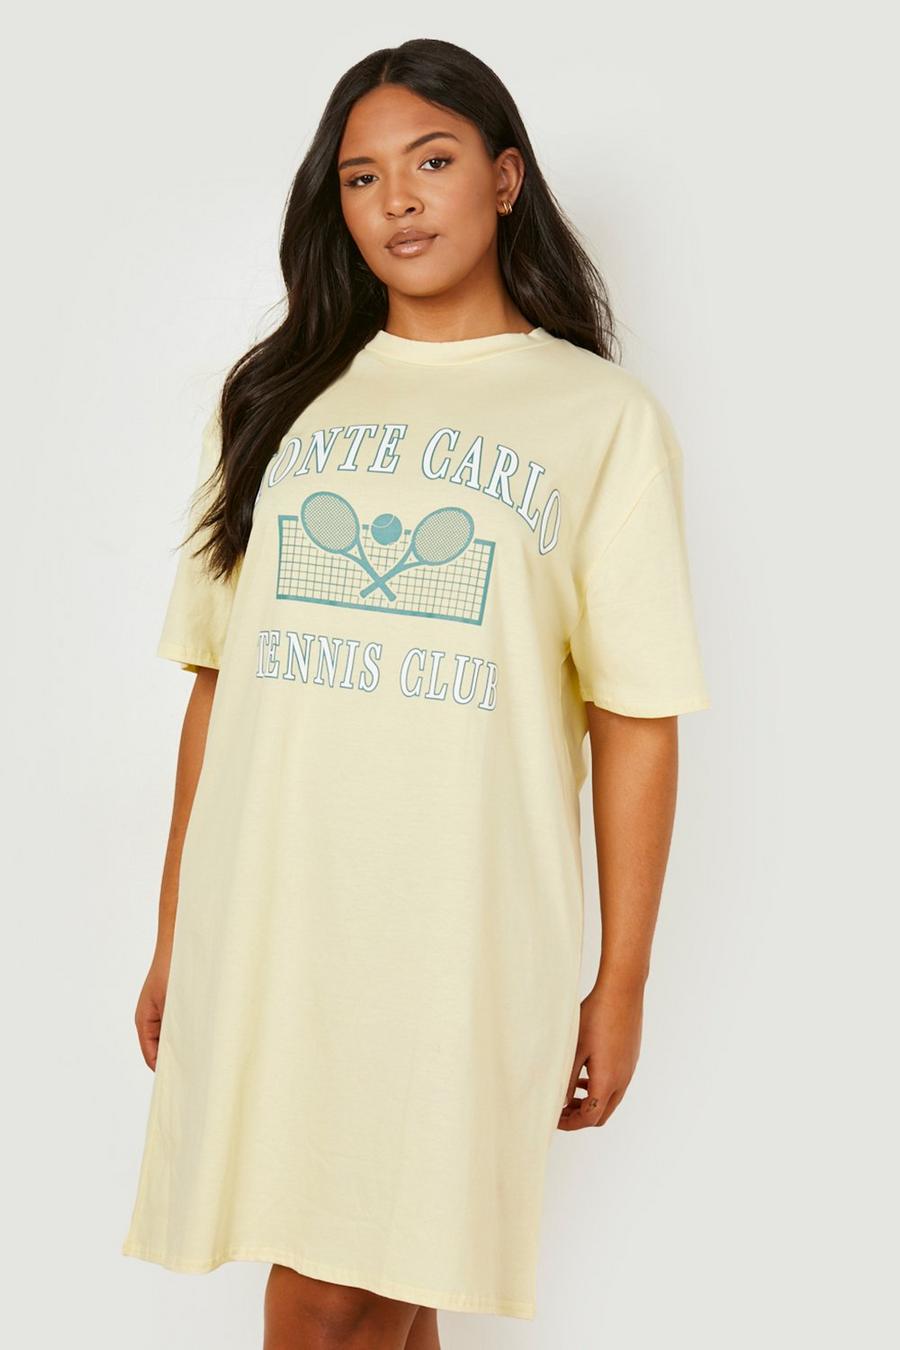 Vestito T-shirt Plus Size con slogan Tennis Club, Yellow giallo image number 1